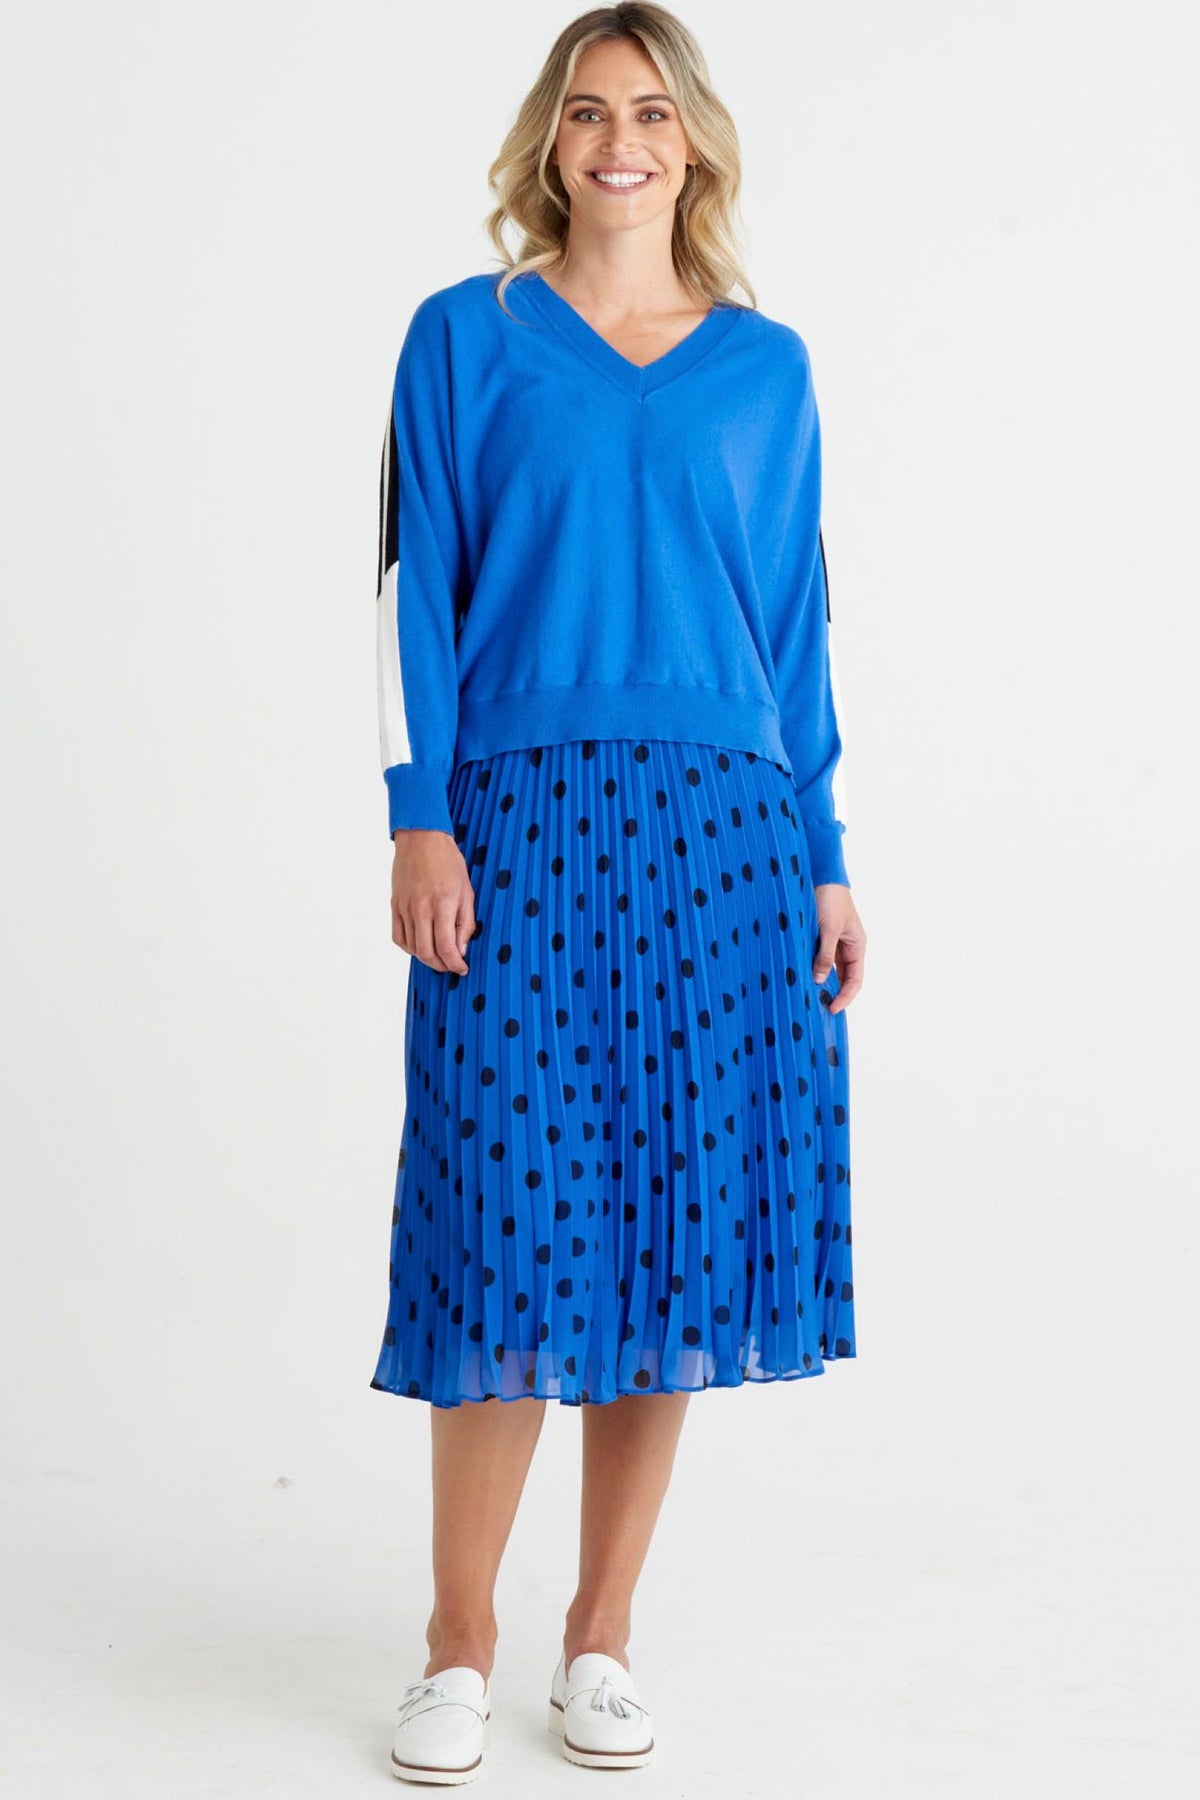 Chanel Pleated Skirt Bluebell Spots